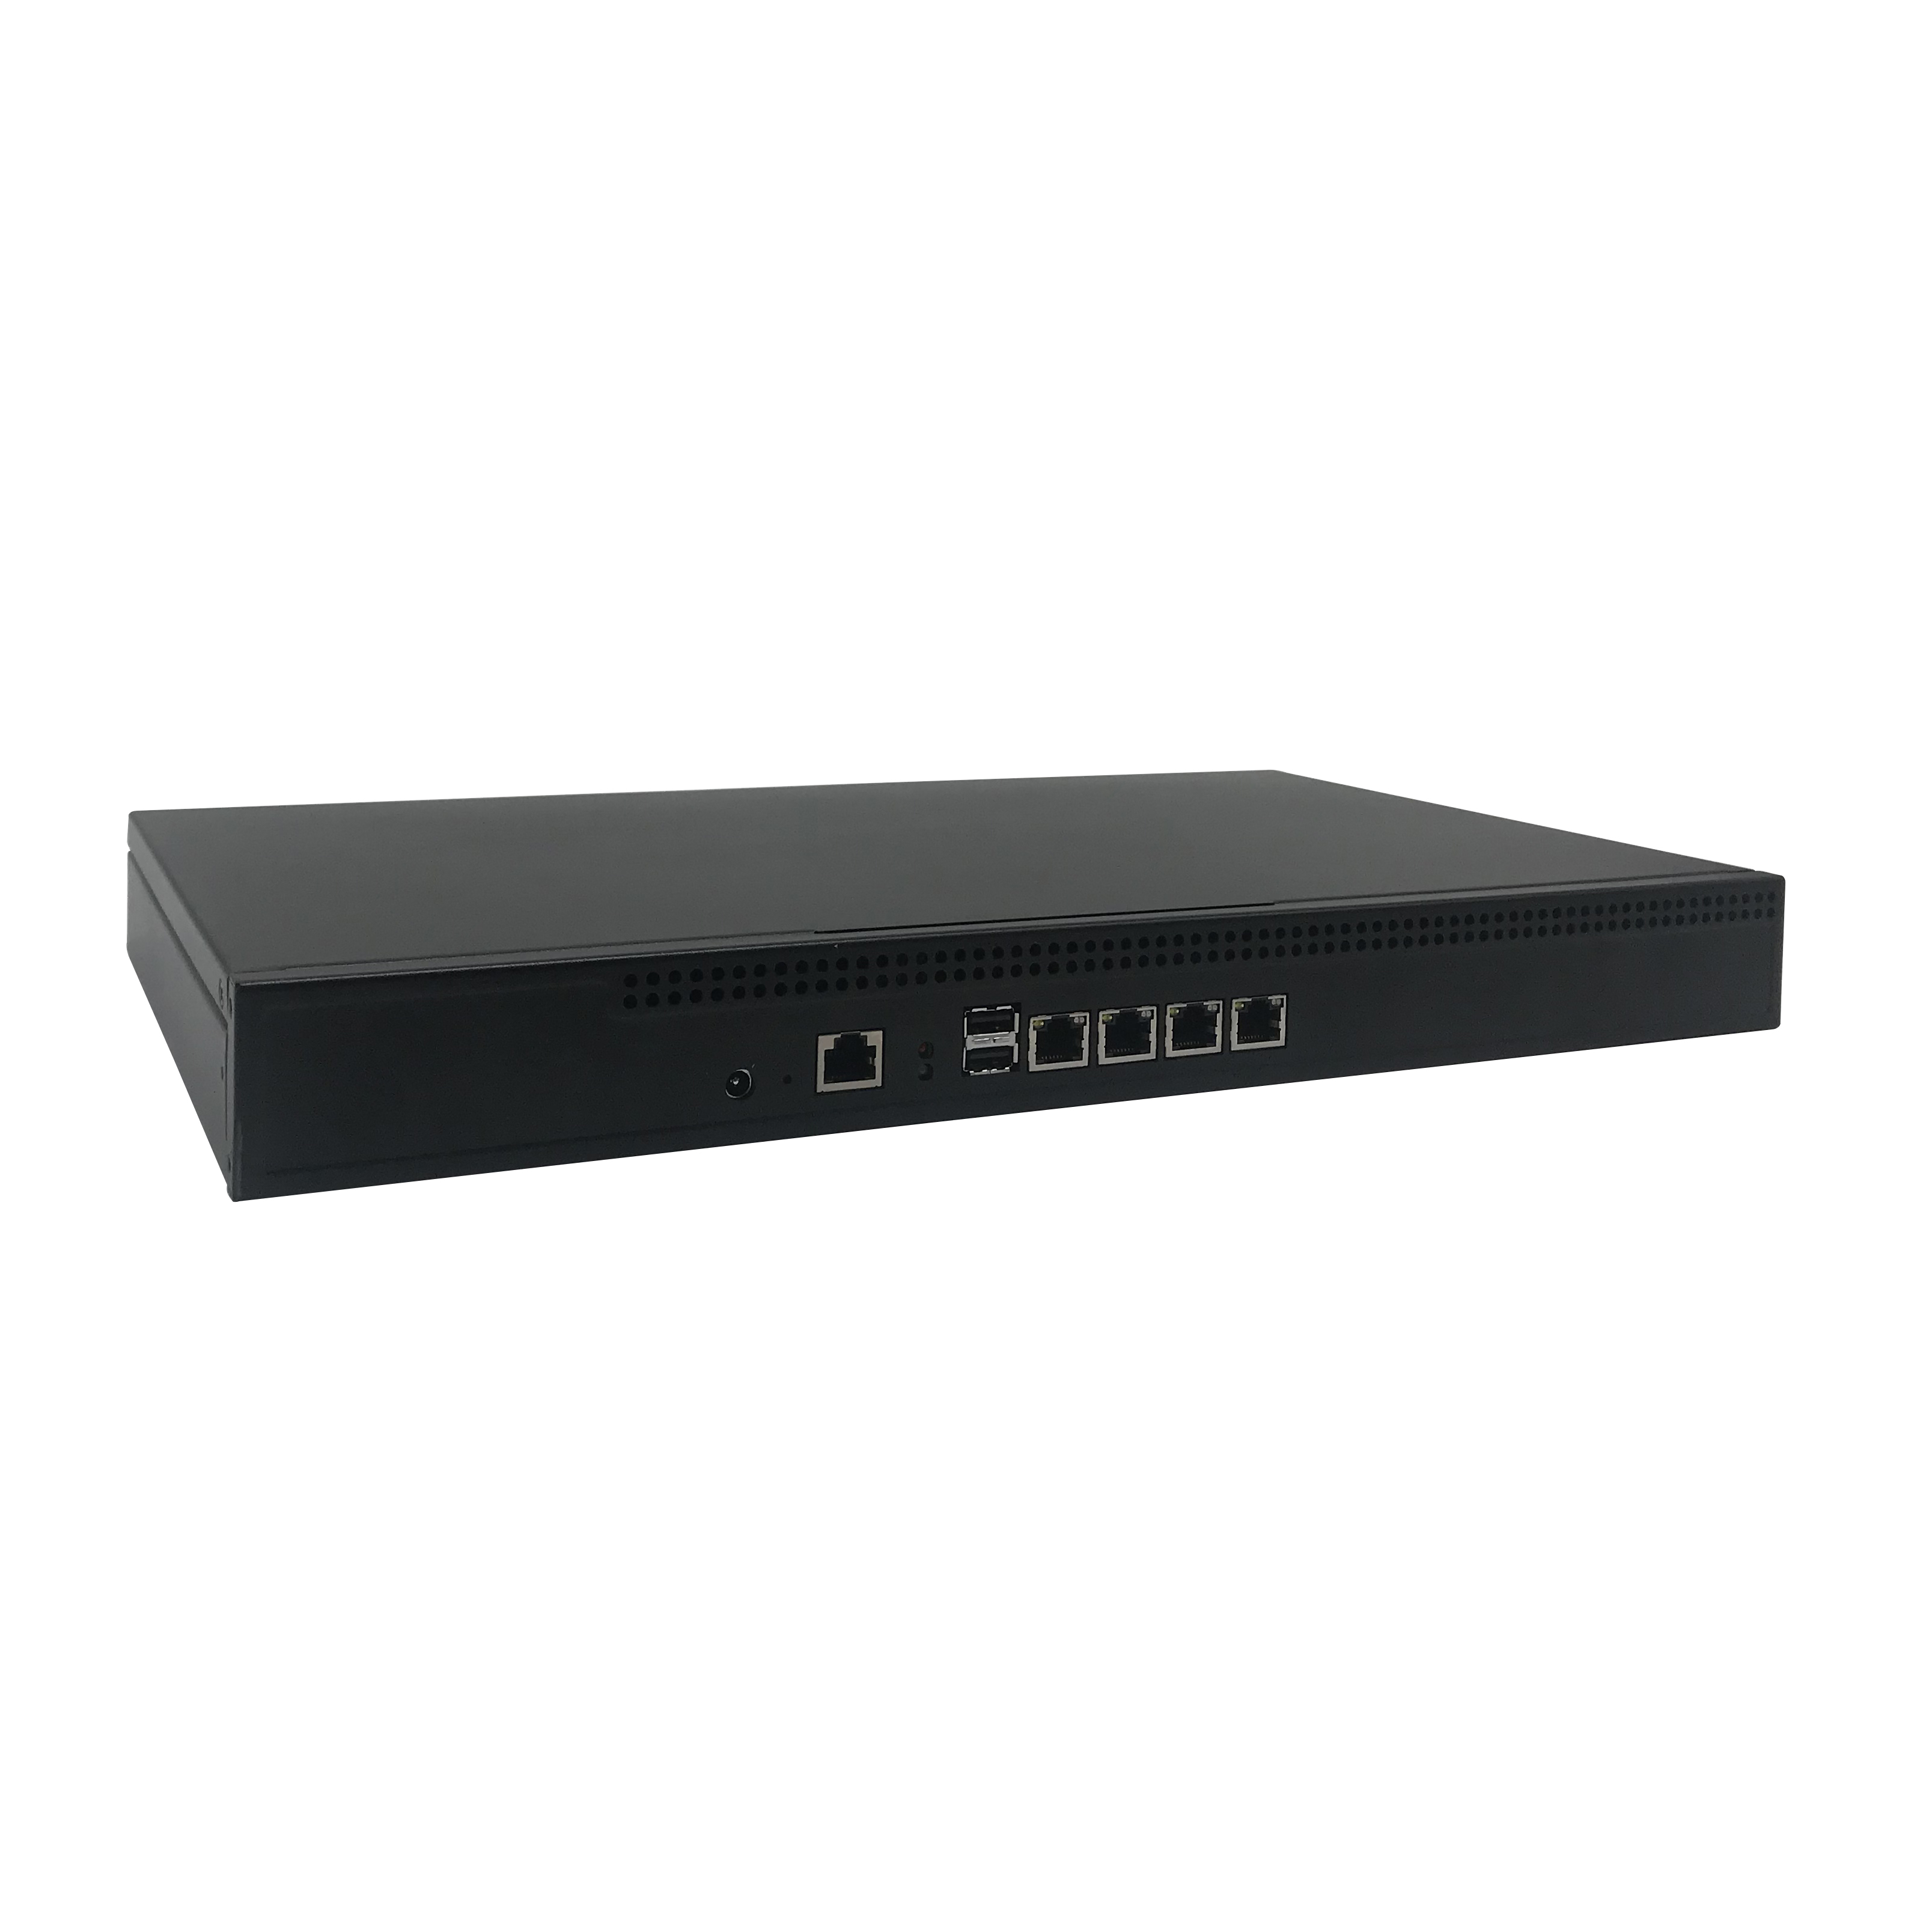 the best firewall hardware products 1U Rackmount 4 LAN Network Appliance Celeron J1900 Quad Core top internet network security